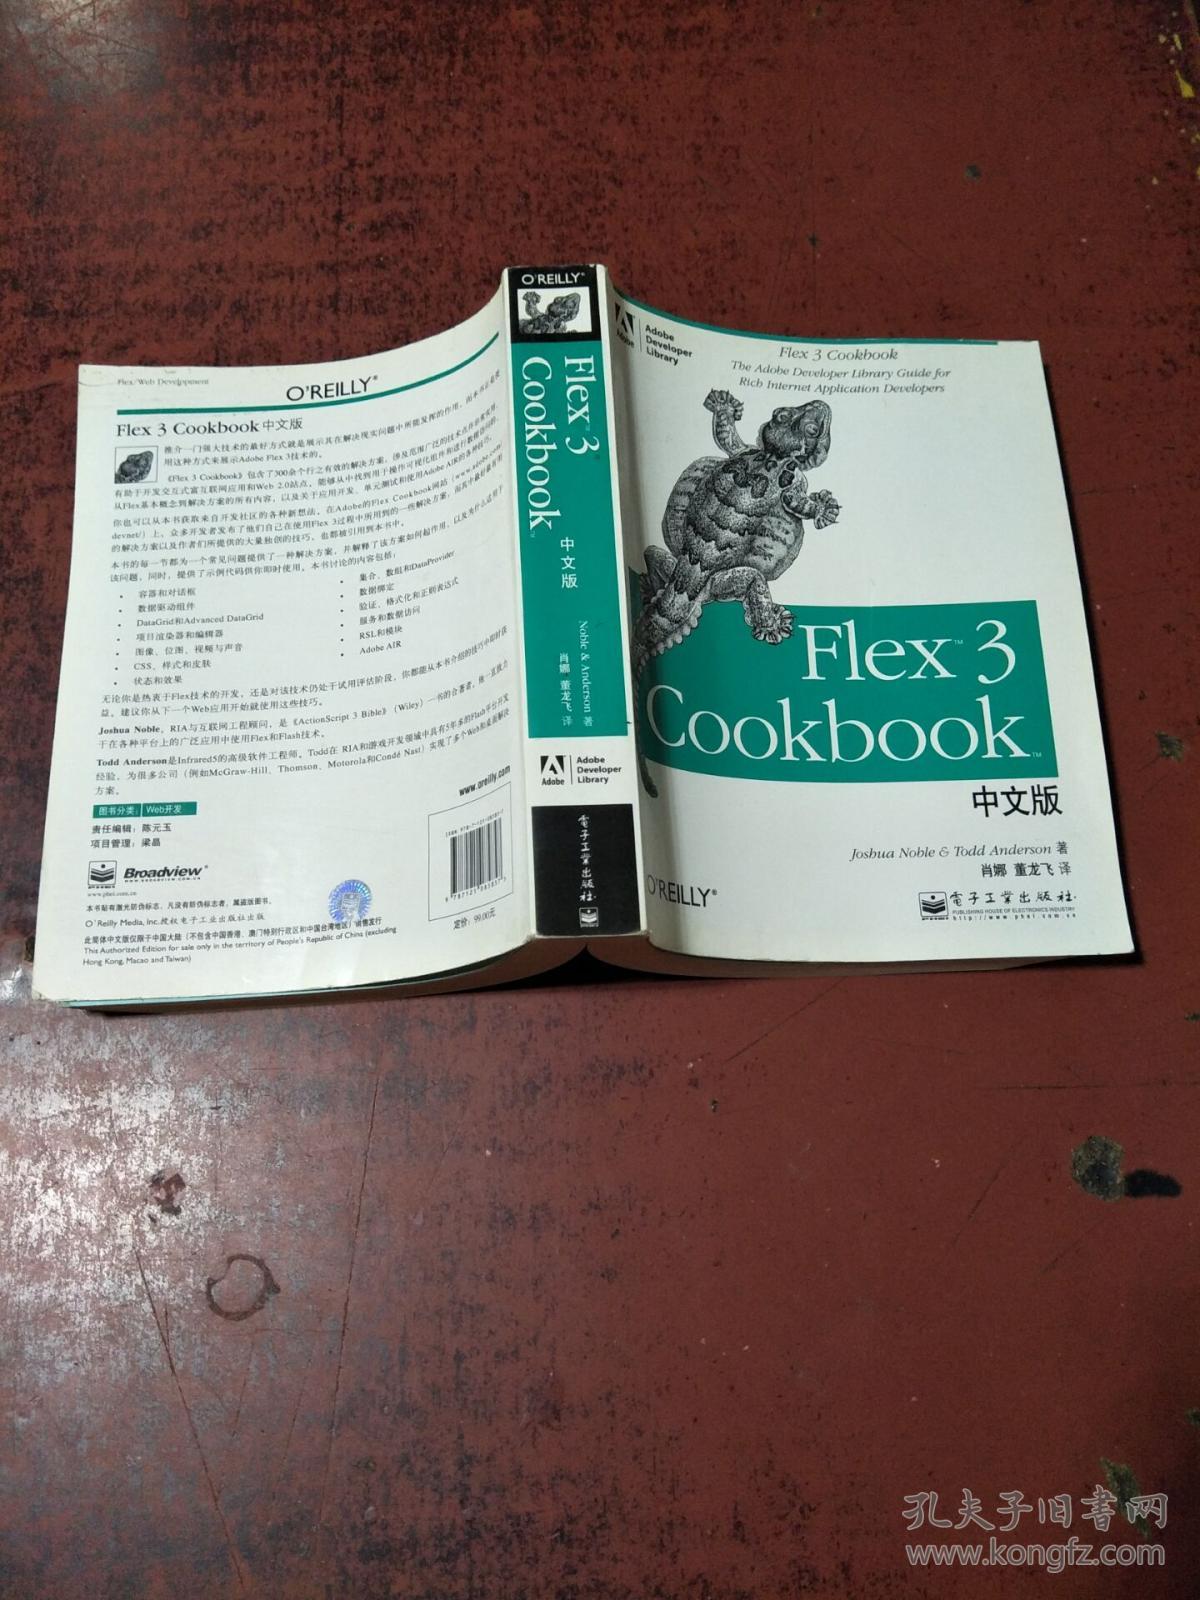 Flex 3 Cookbook中文版:The Adobe Derverlope